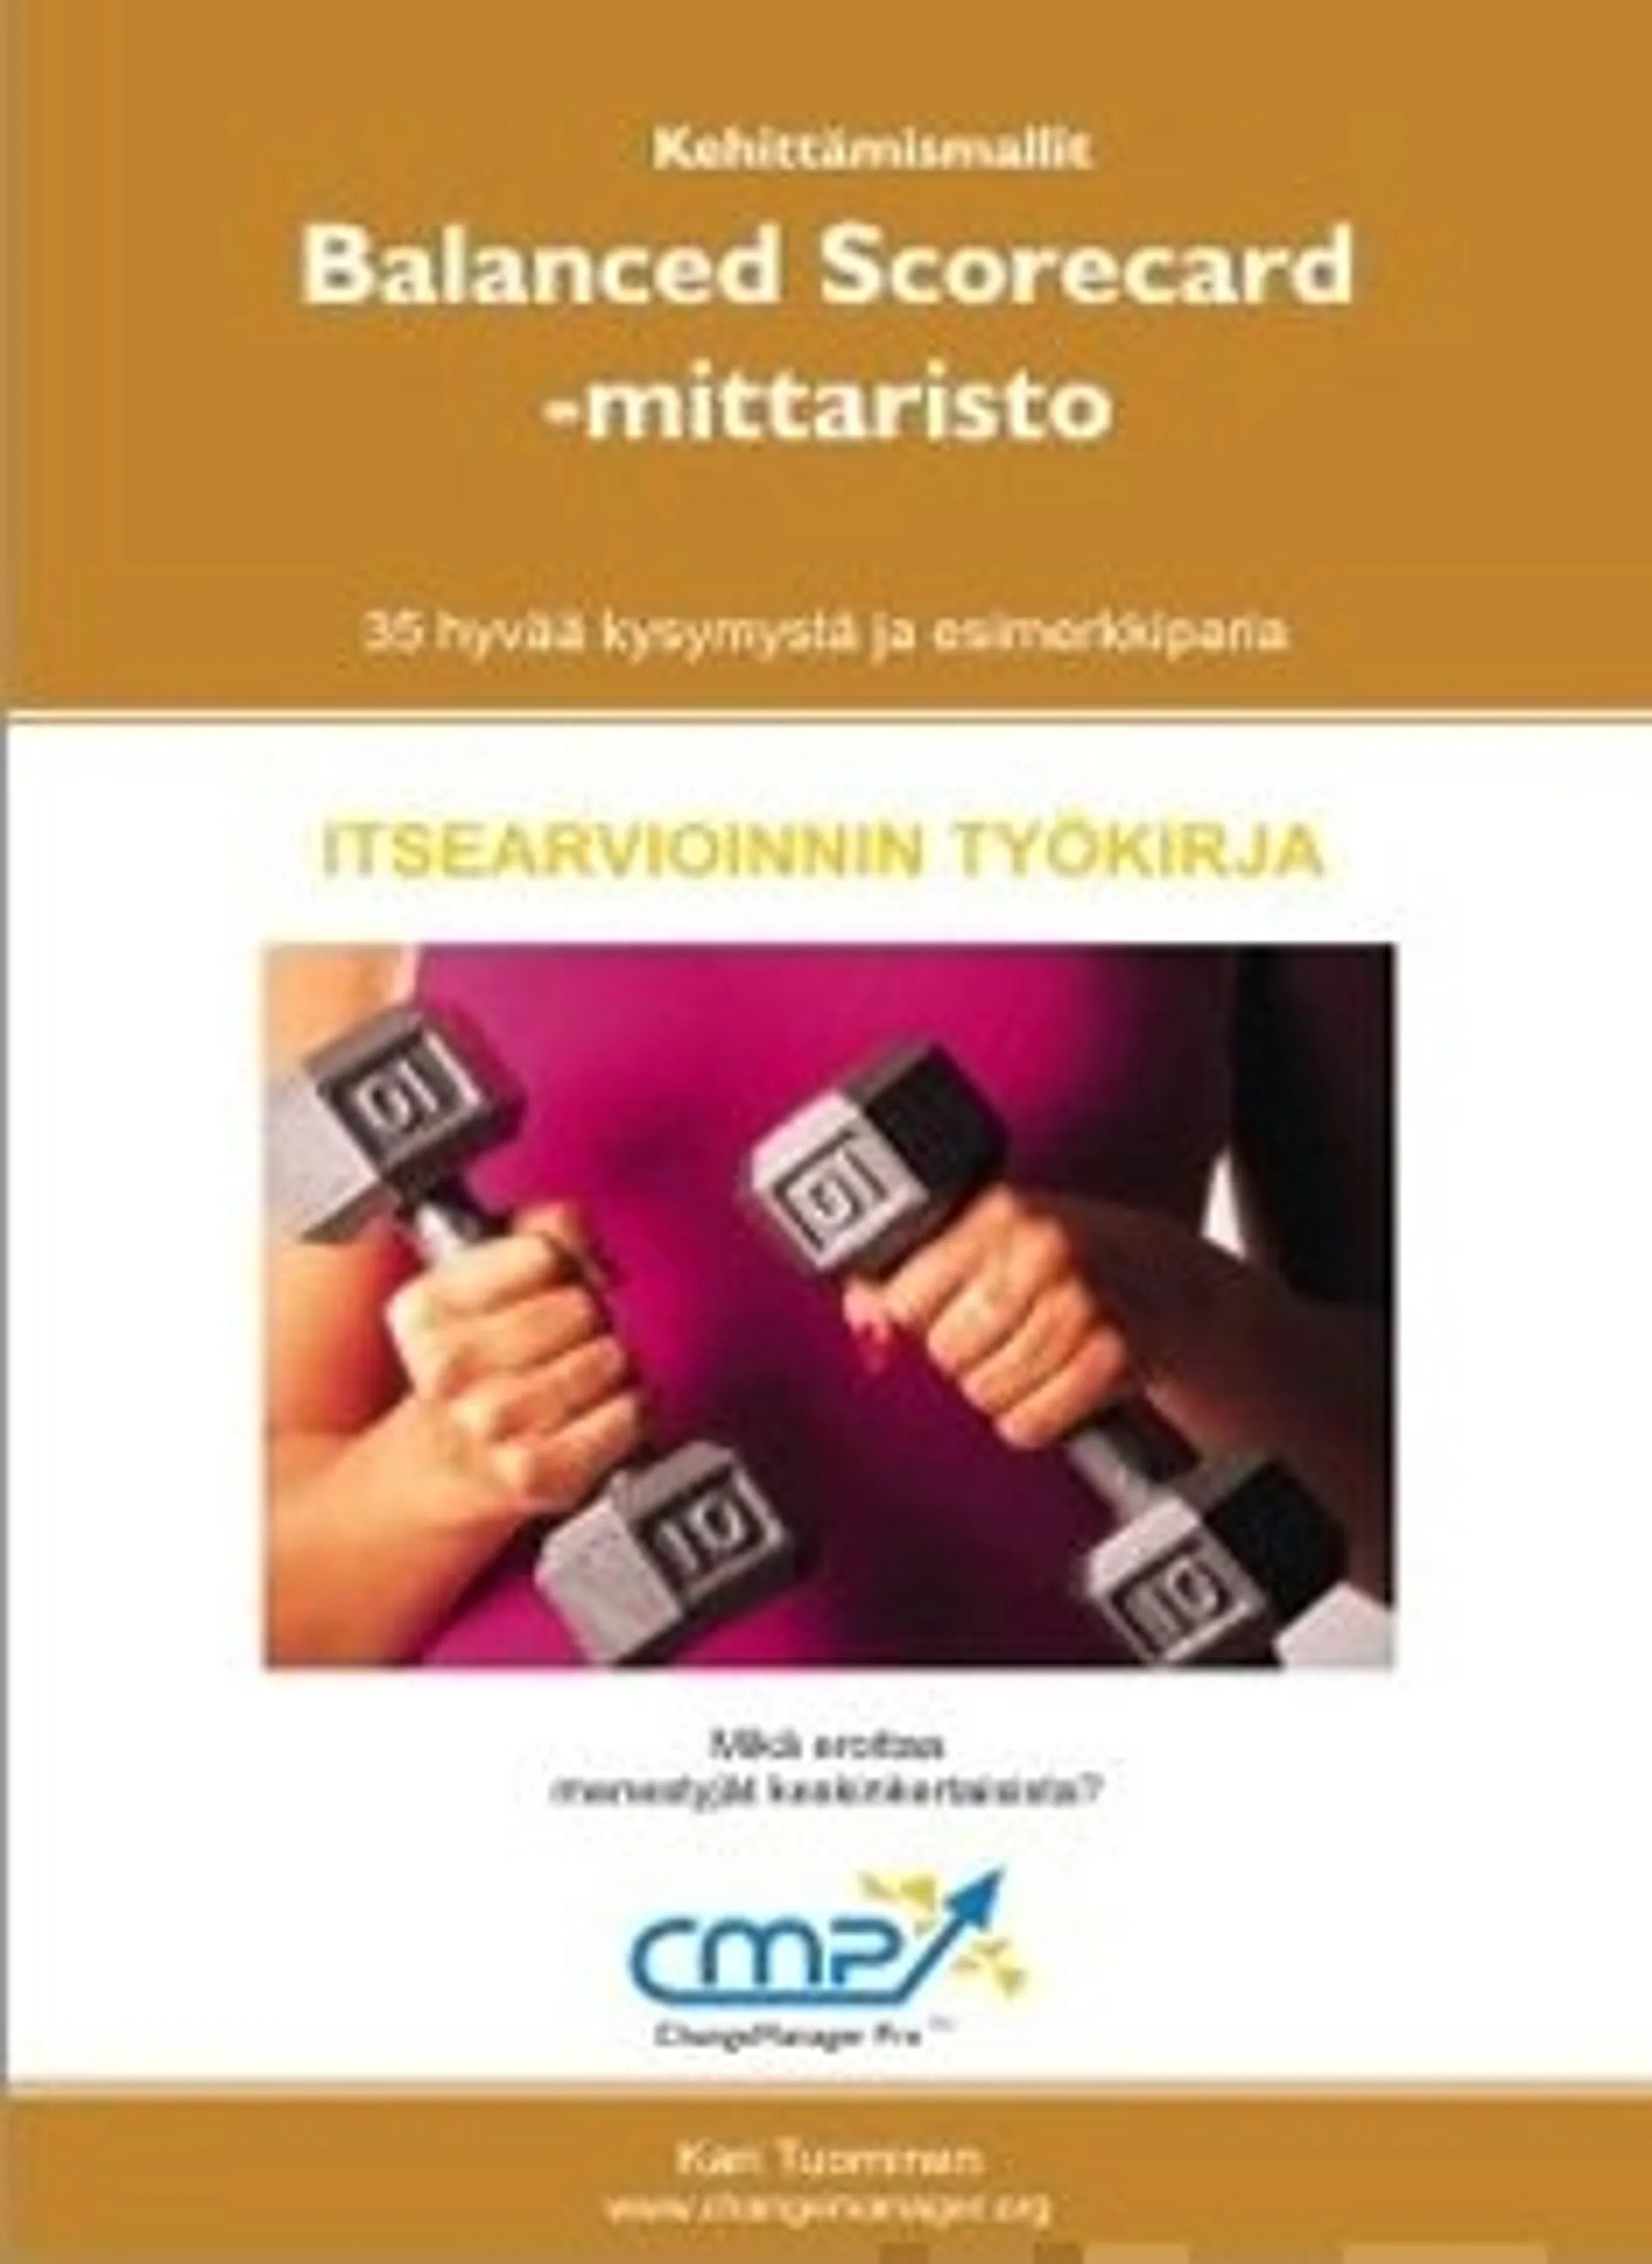 Balanced scorecard -mittaristo - EFQM 2010